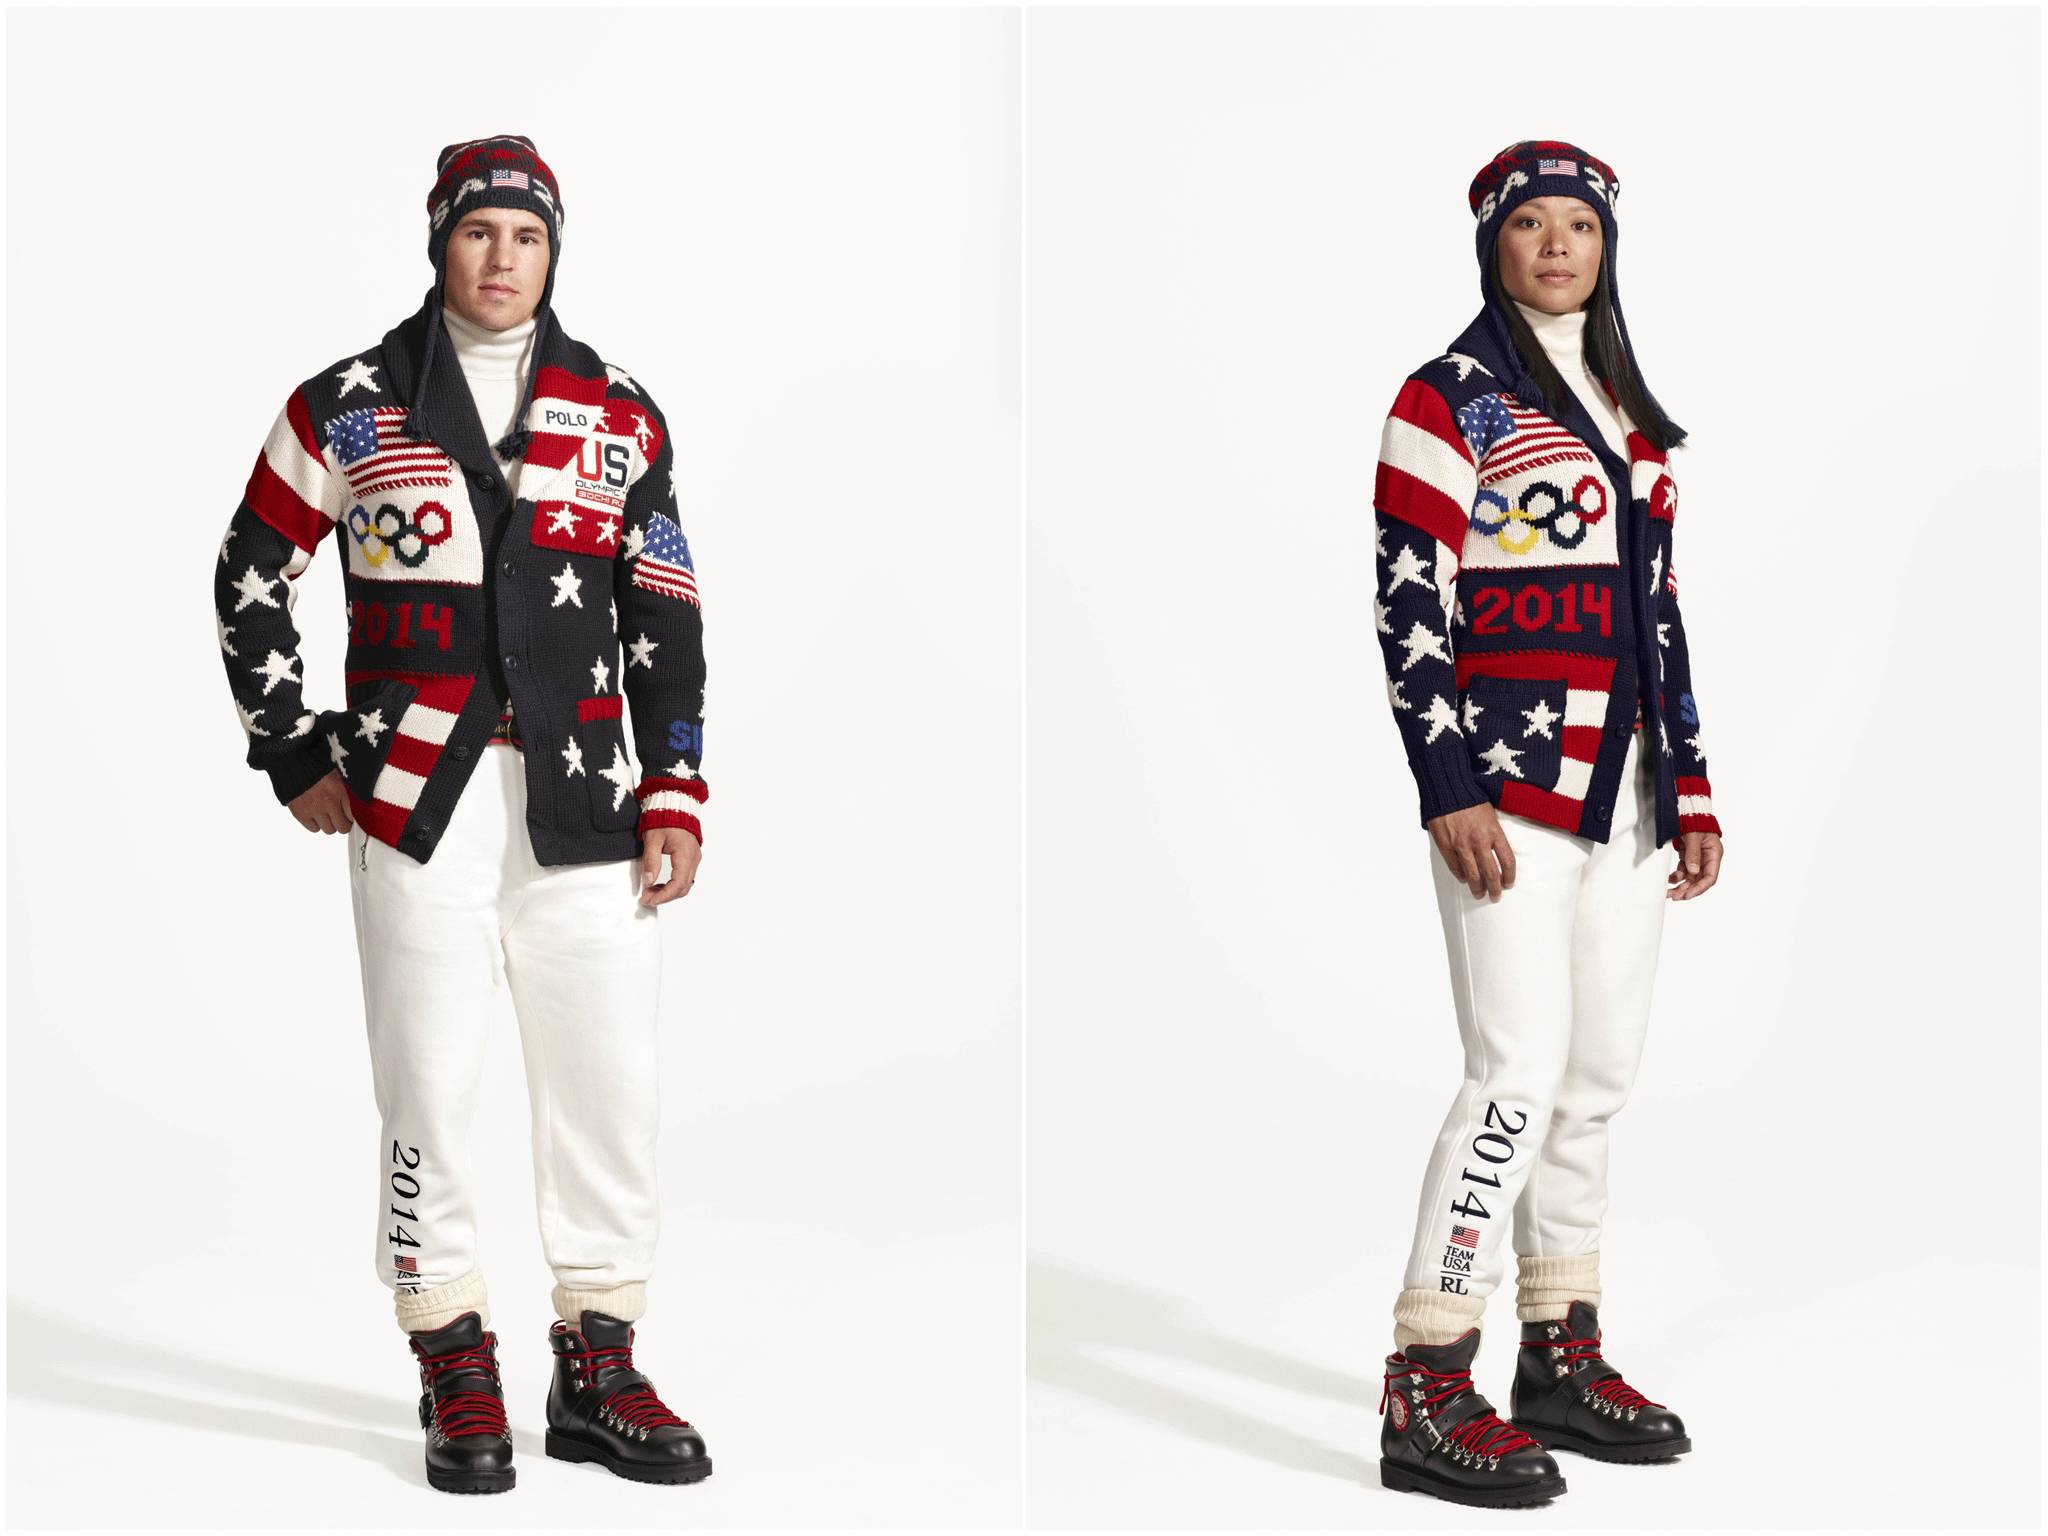 Winter Olympics 2014: Team USA uniform for Sochi Olympics is a ...